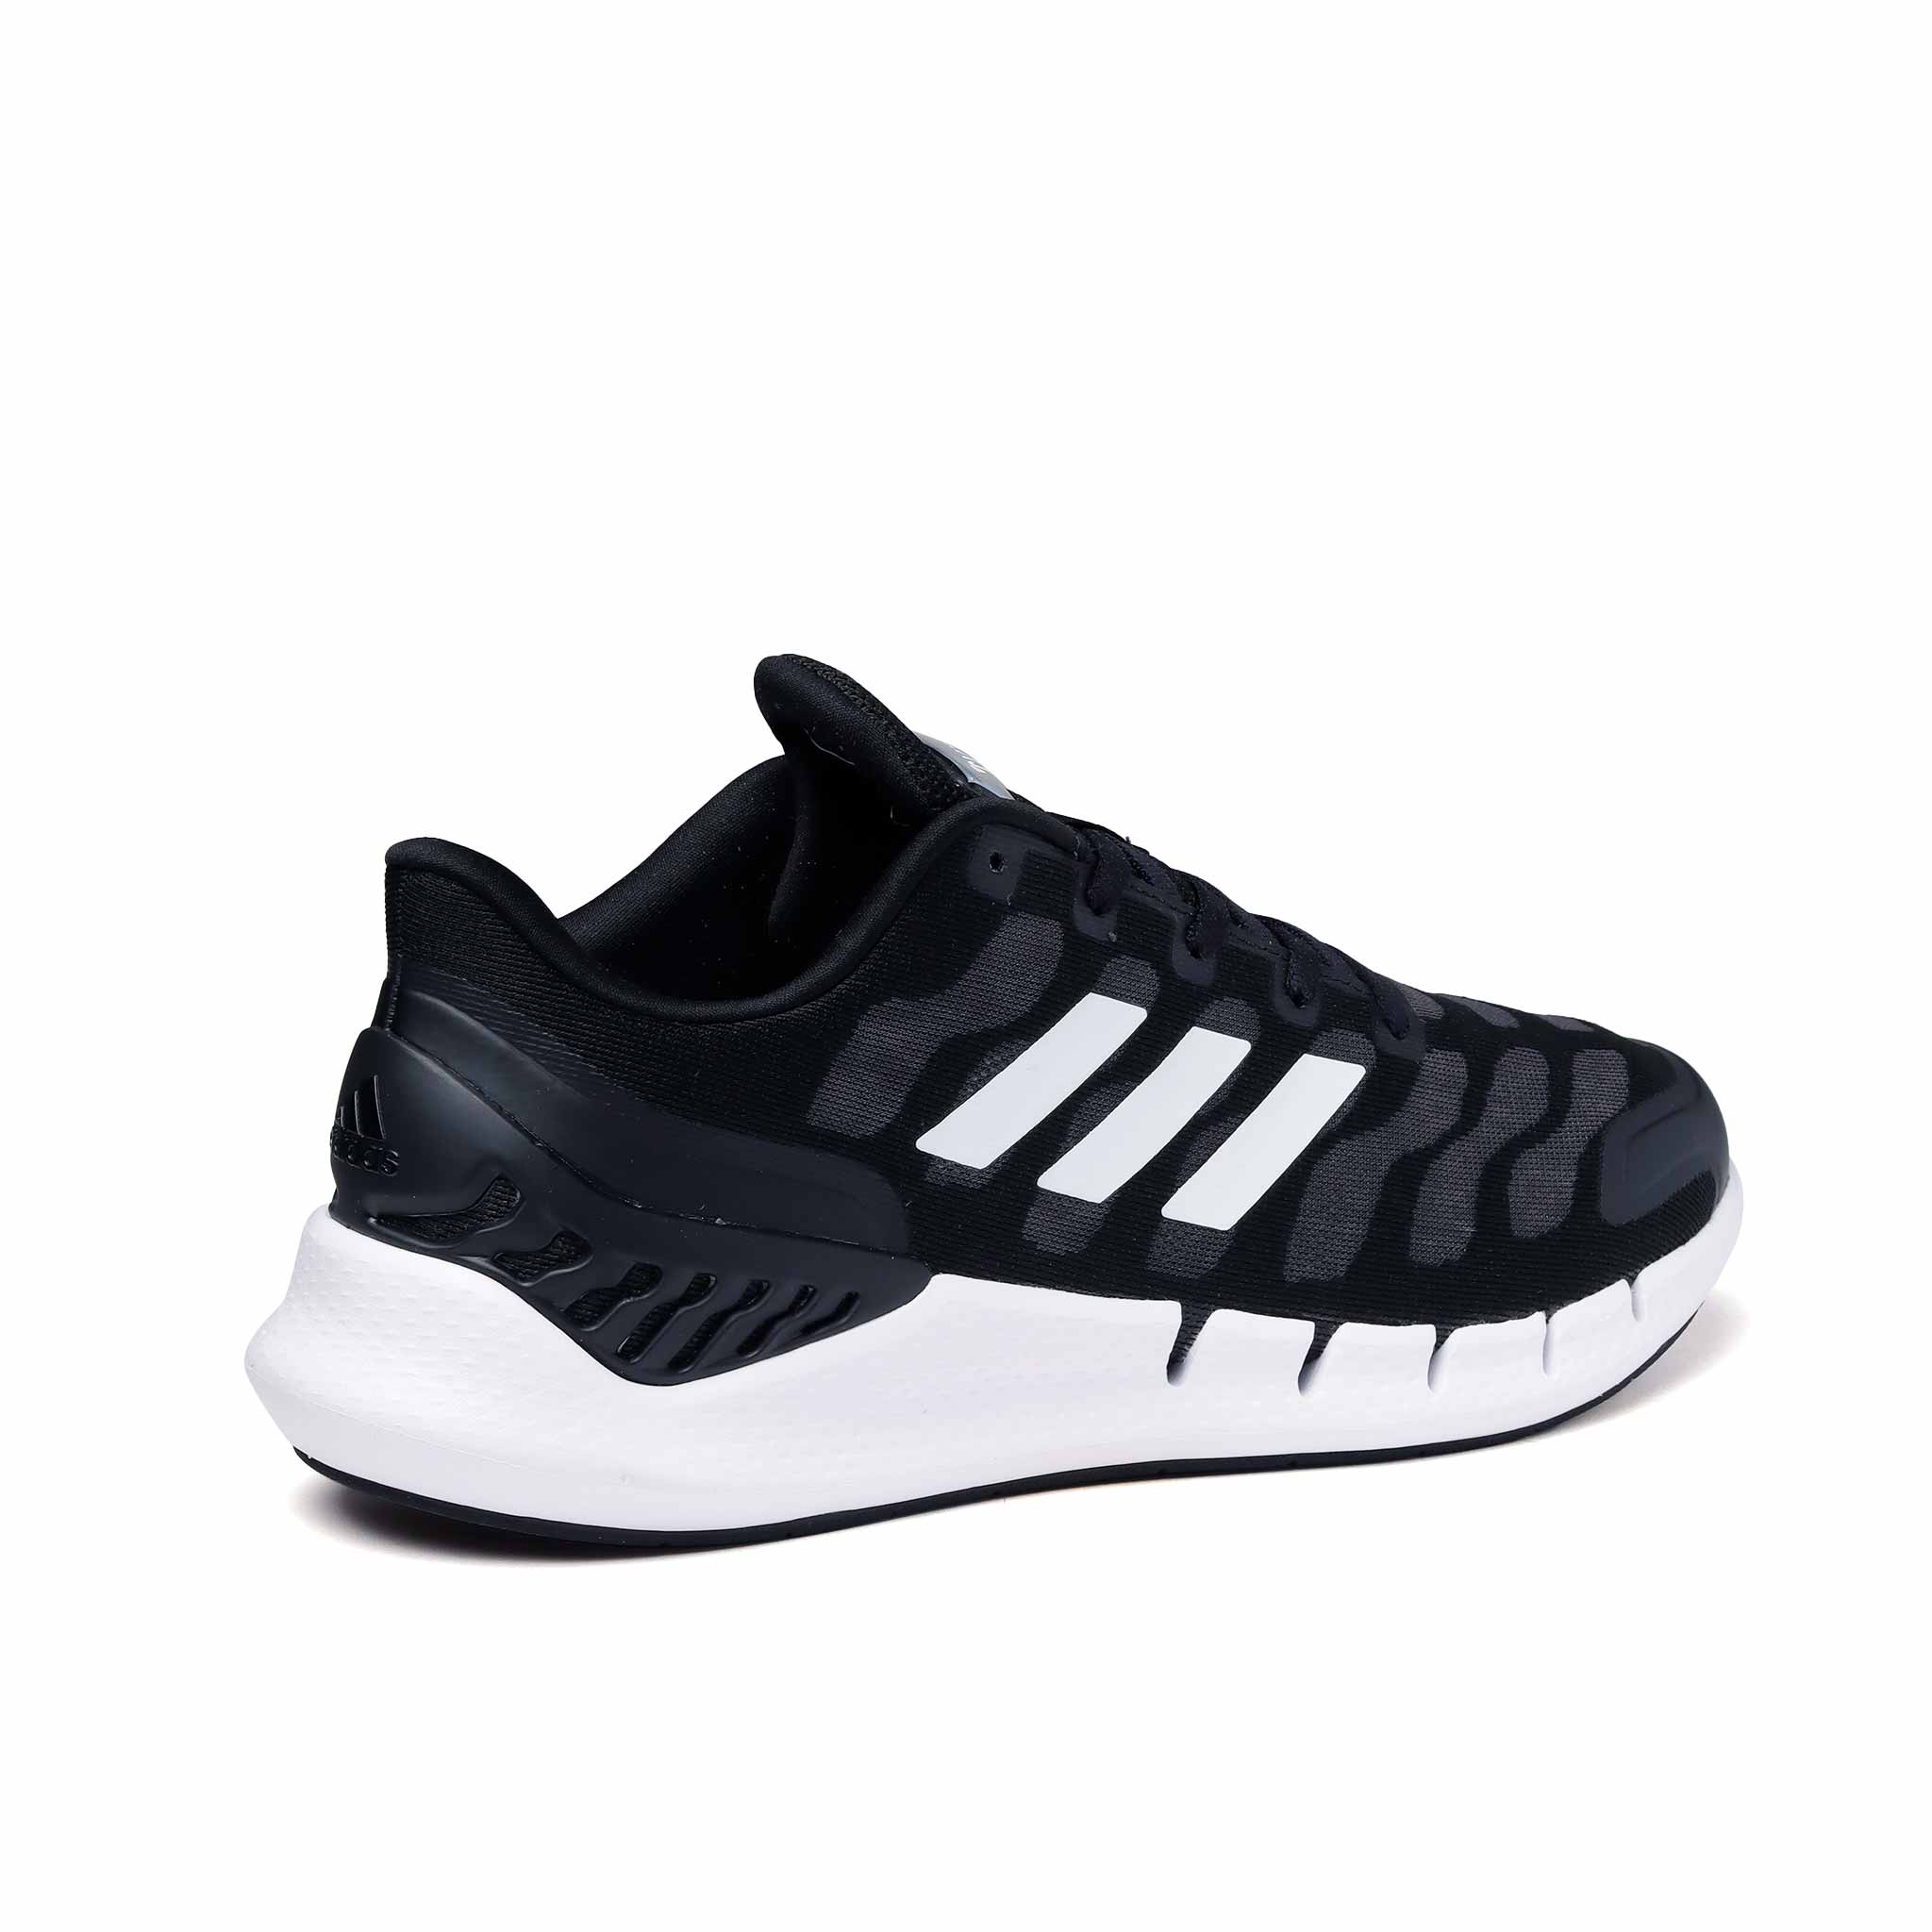 Adidas Climacool Hombre FX7351 Running Negro